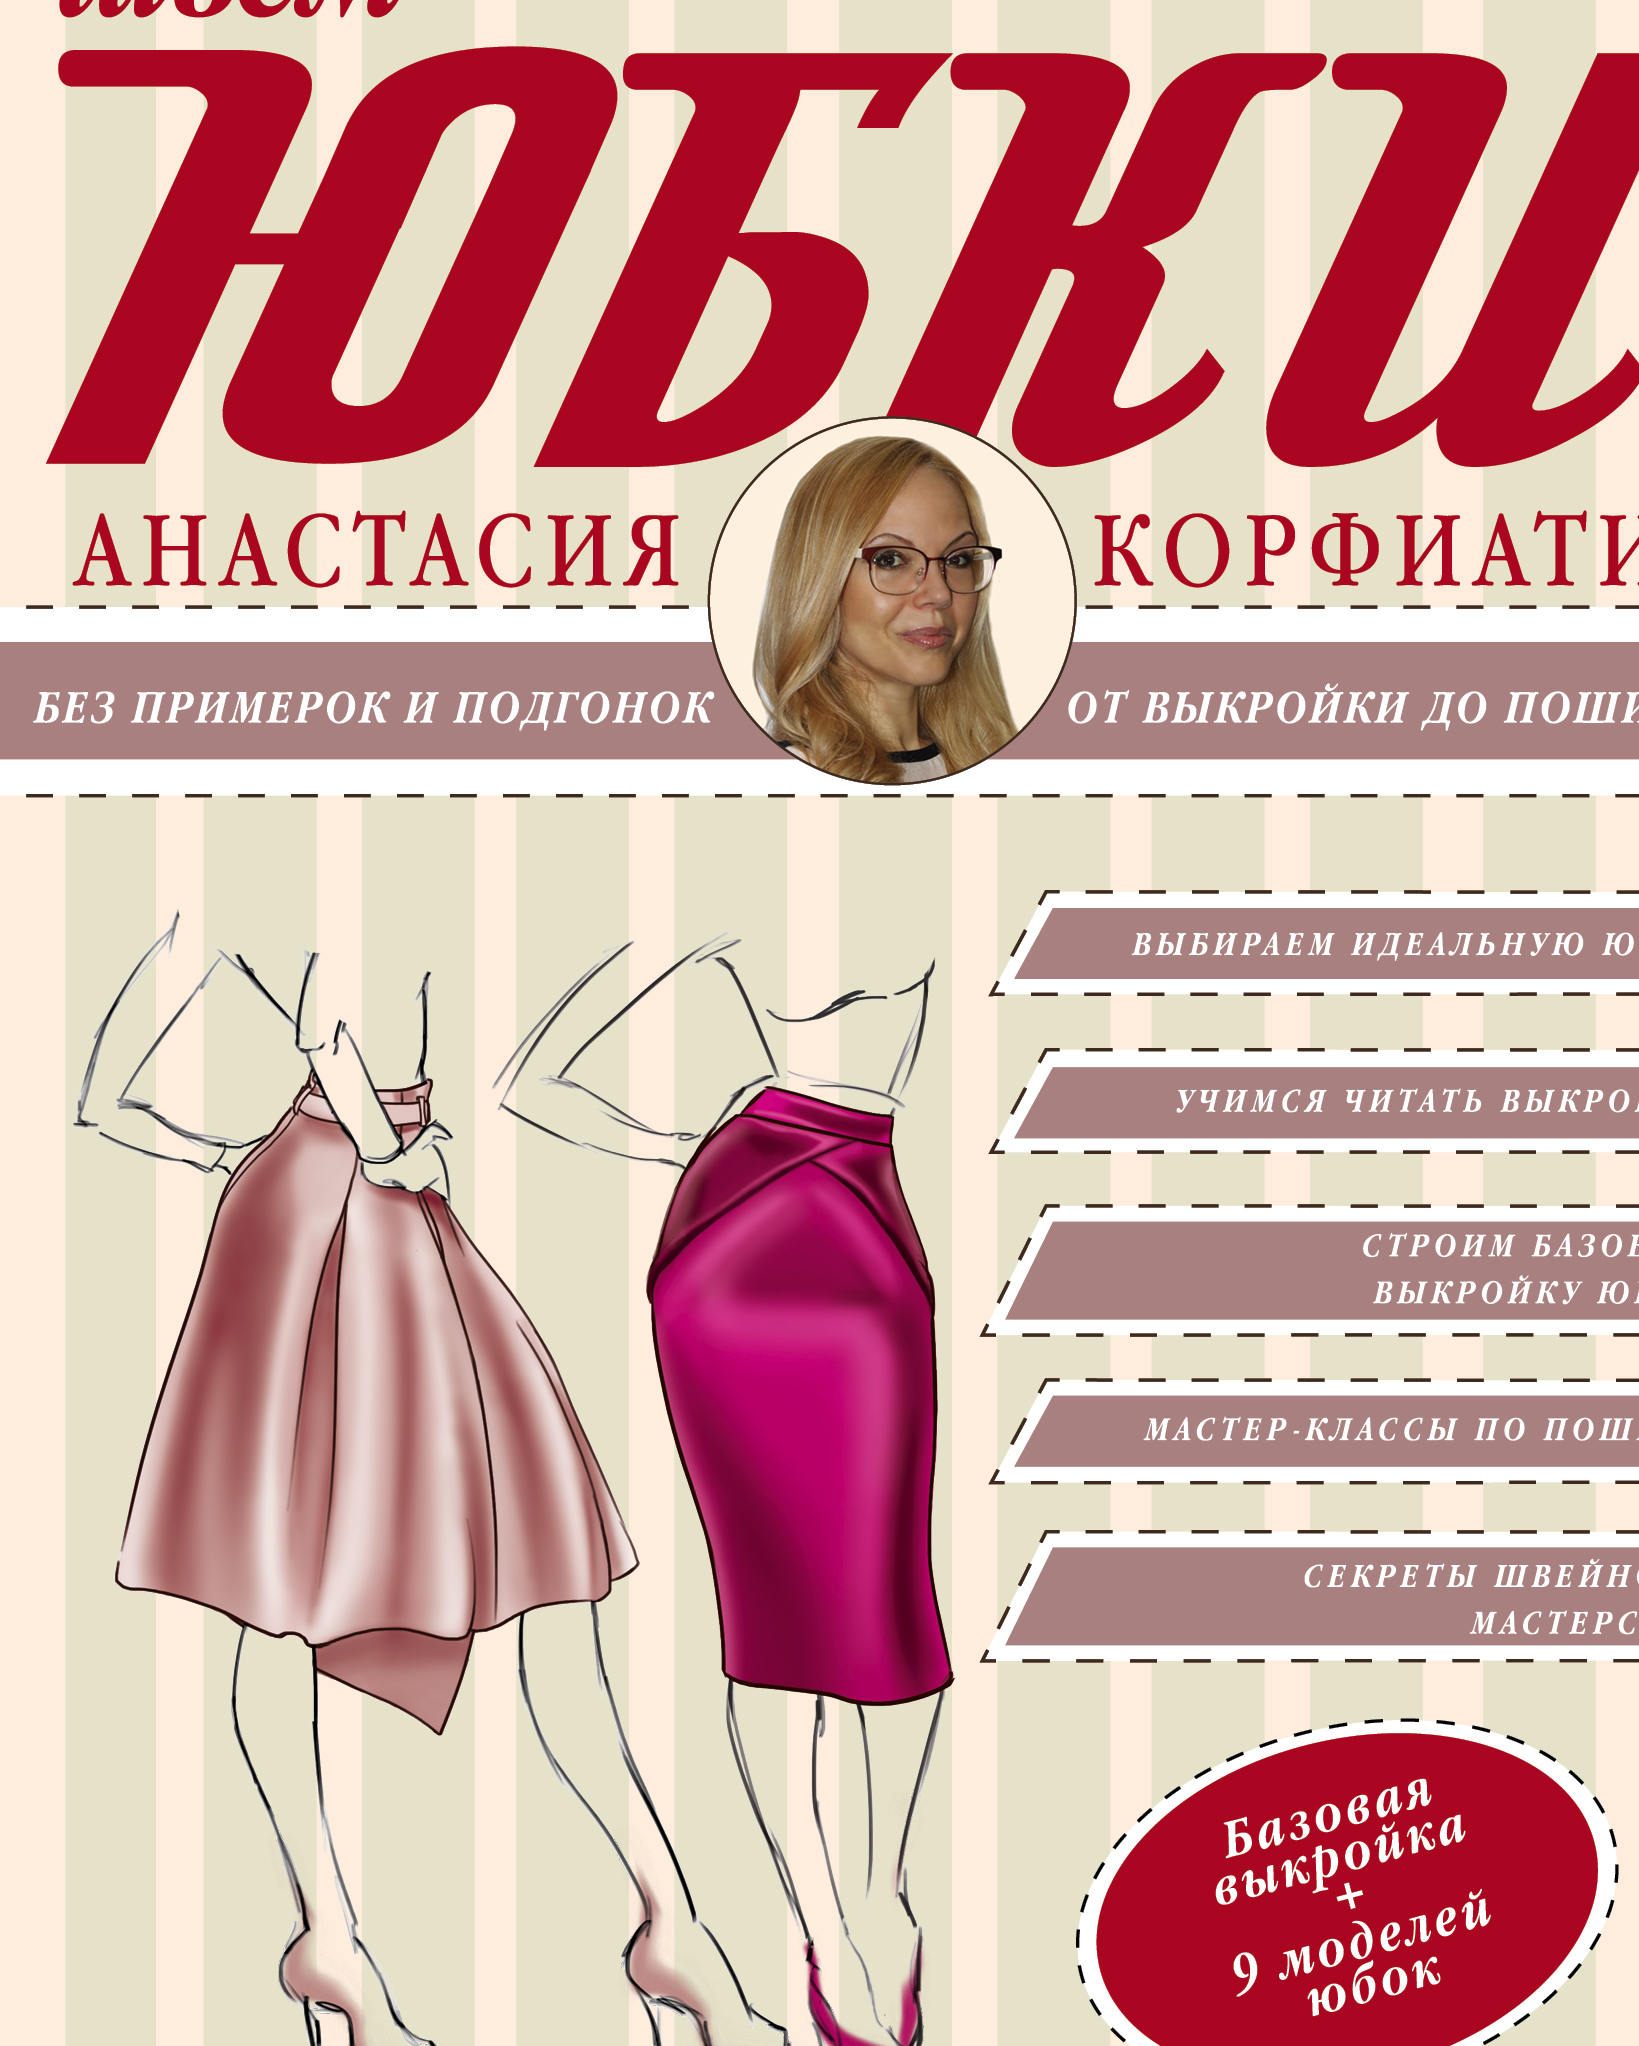 Корфиати Анастасия  Шьем юбки без примерок и подгонок - страница 0